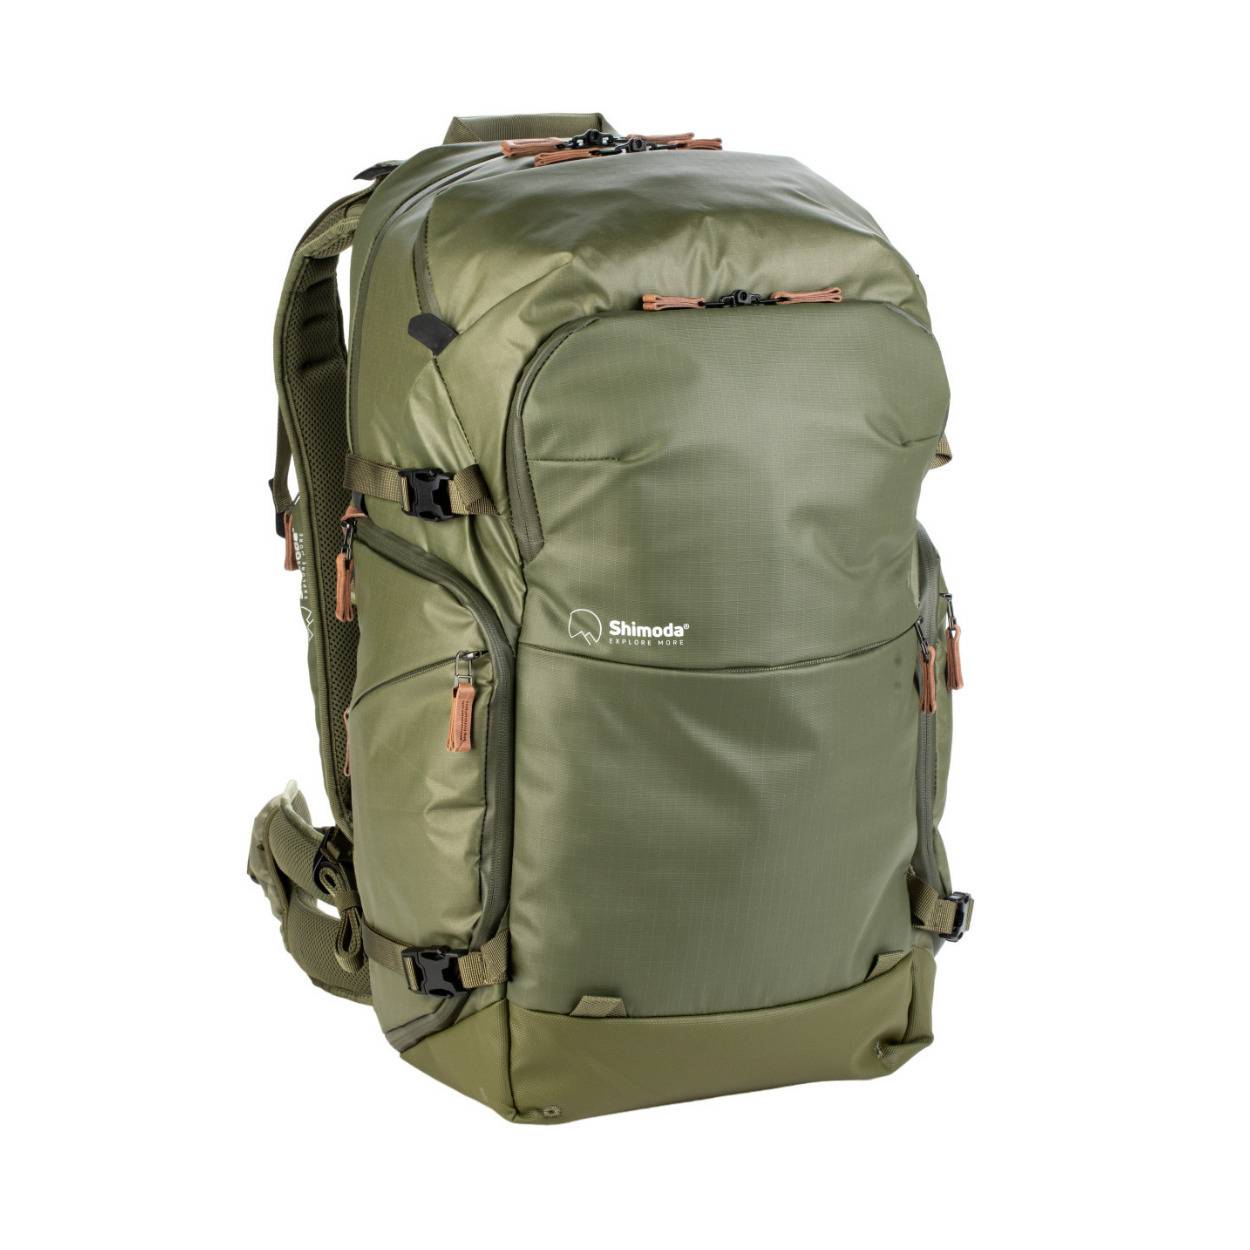 Shimoda Explore V2 25 Water-Resistant Backpack Photo Starter Kit (Army Green)